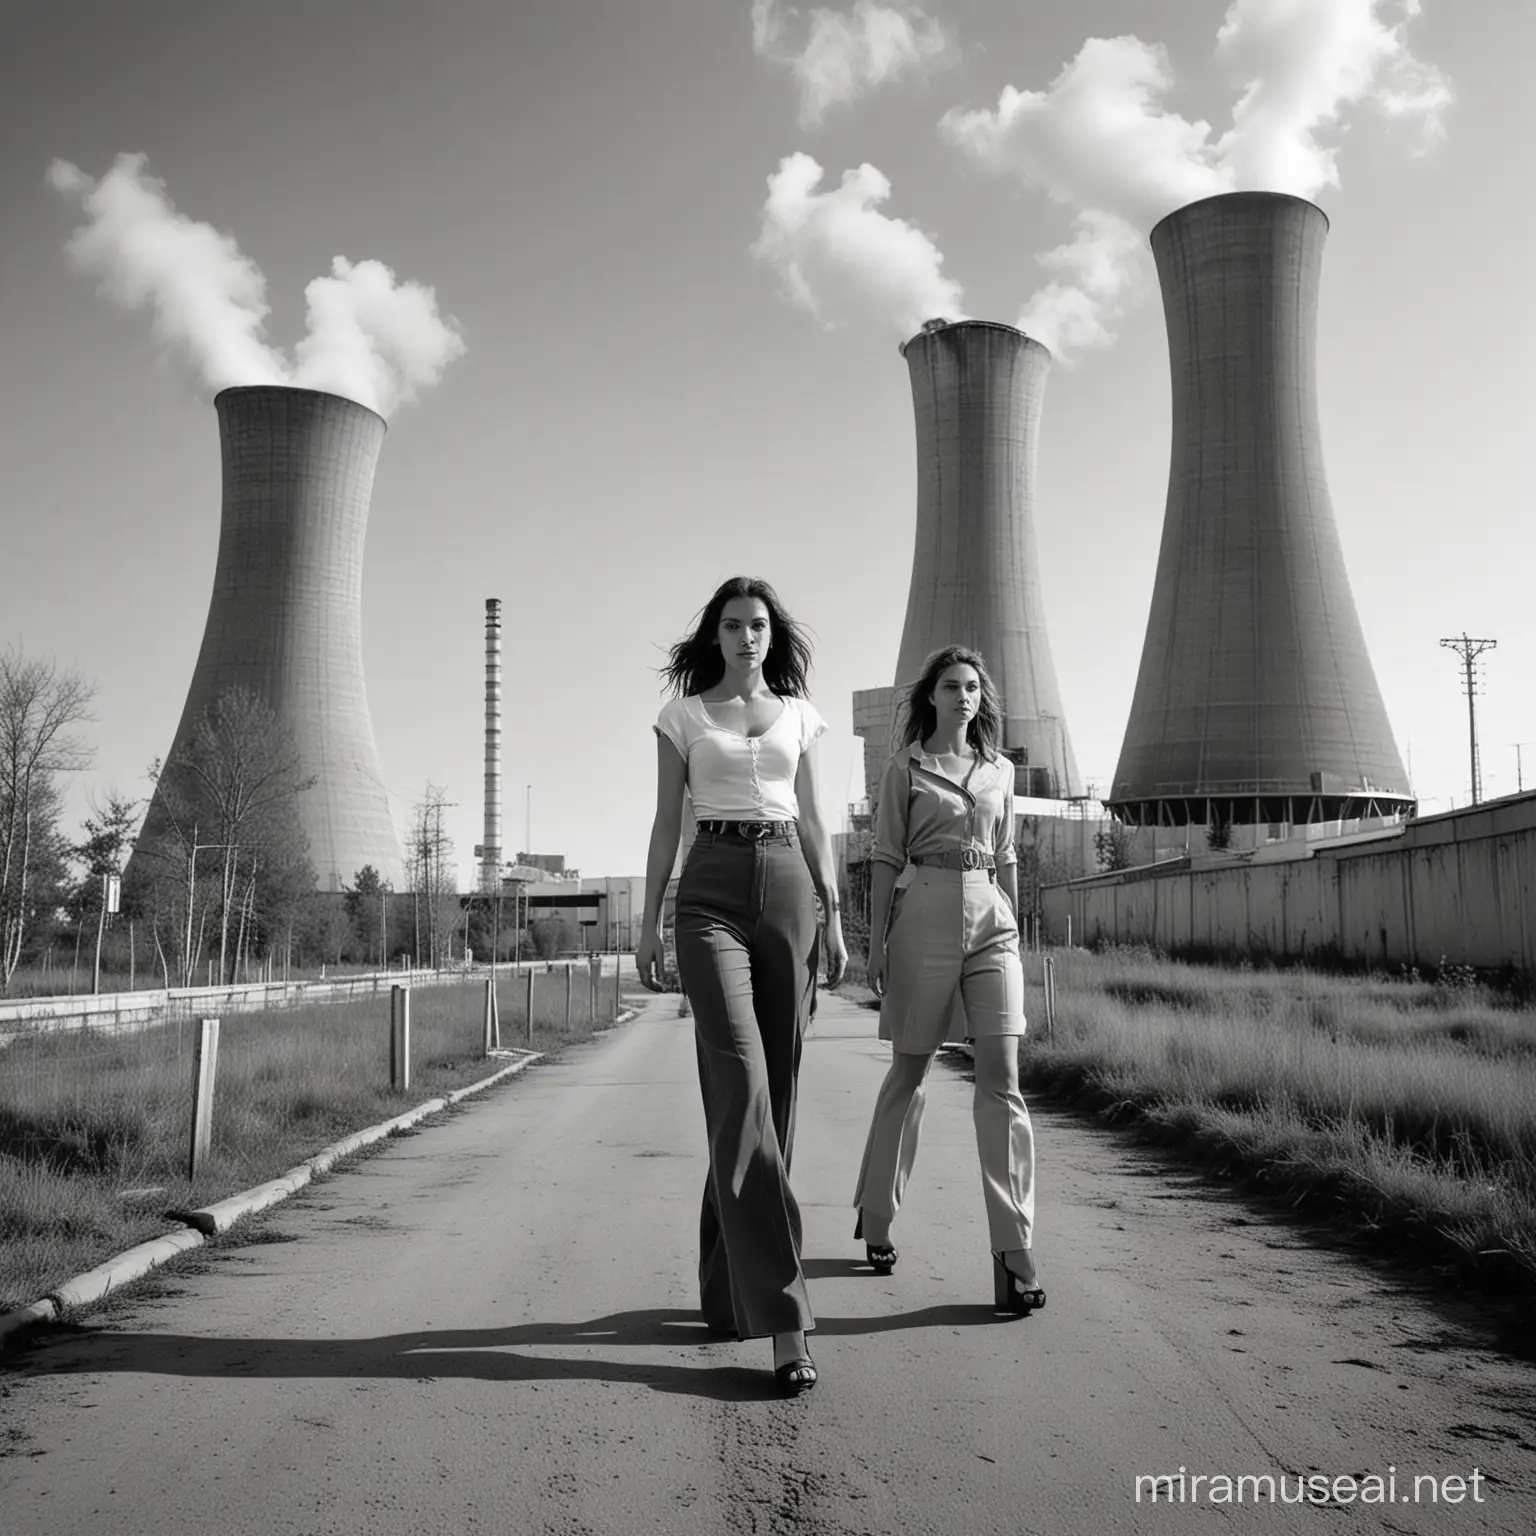 Beautiful Brazilian Woman Walking Two Zombies near Chernobyl Nuclear Power Plant